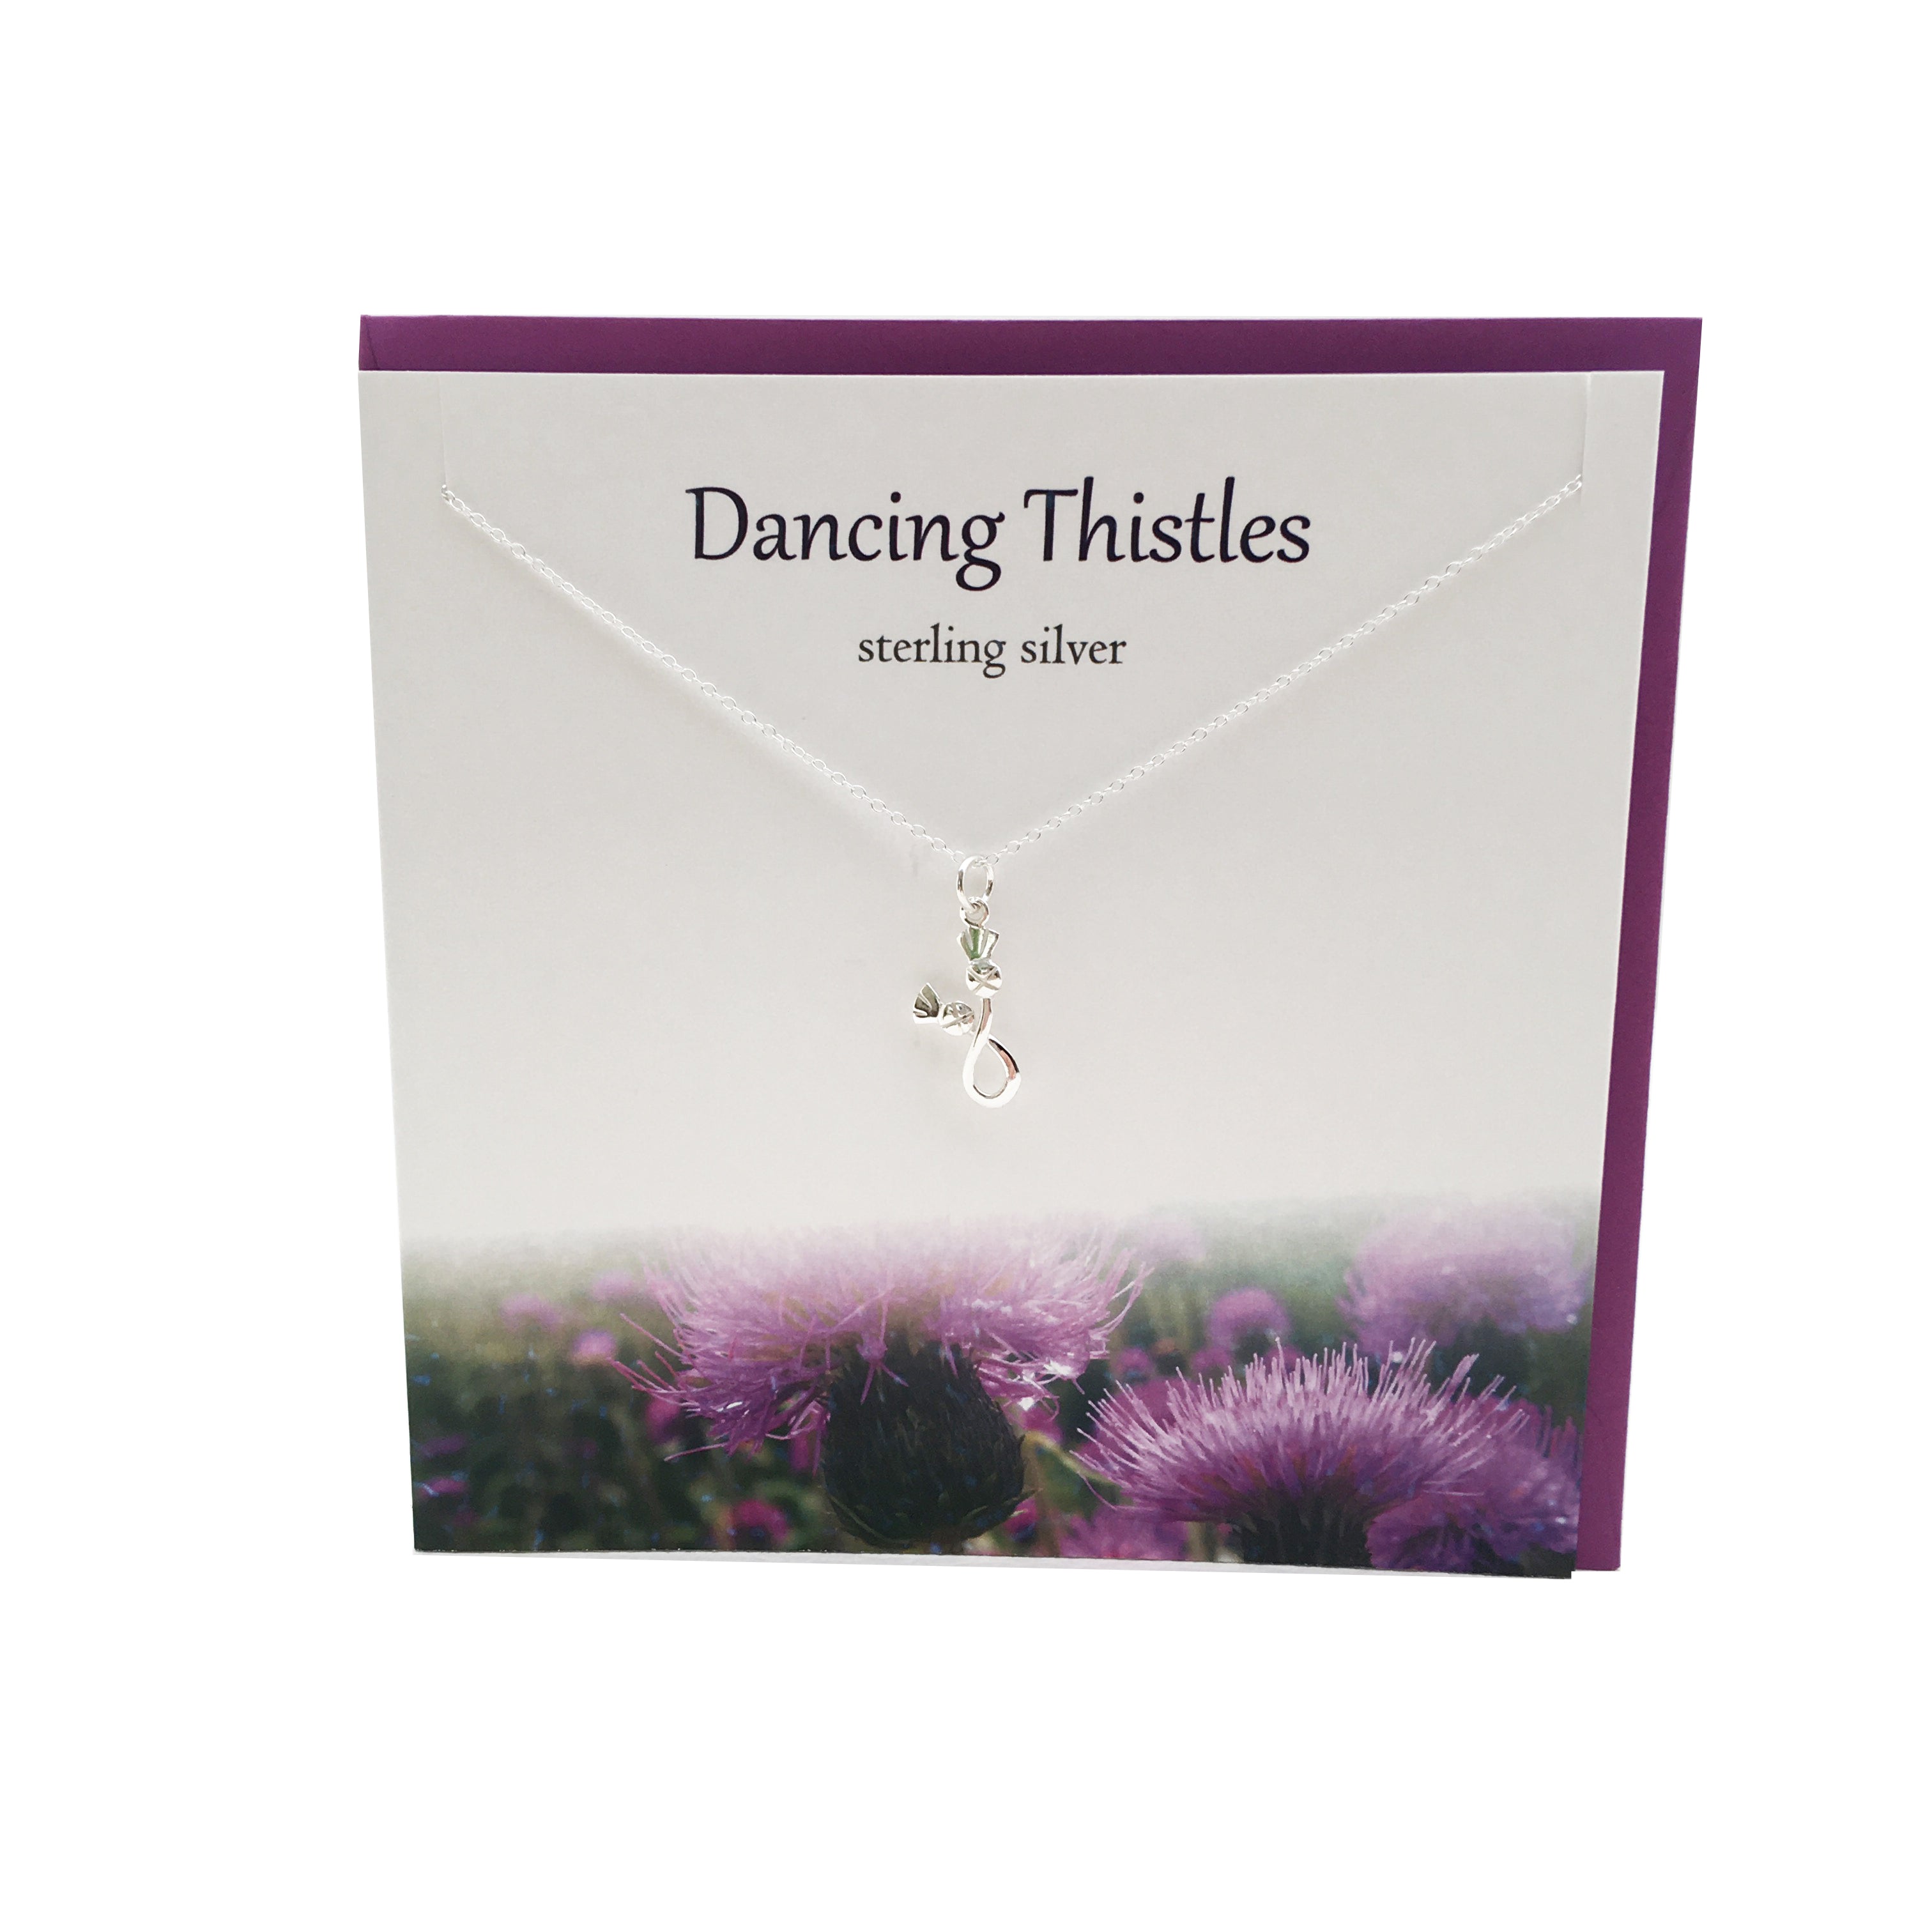 Dancing Thistles silver necklace | The Silver Studio Scotland